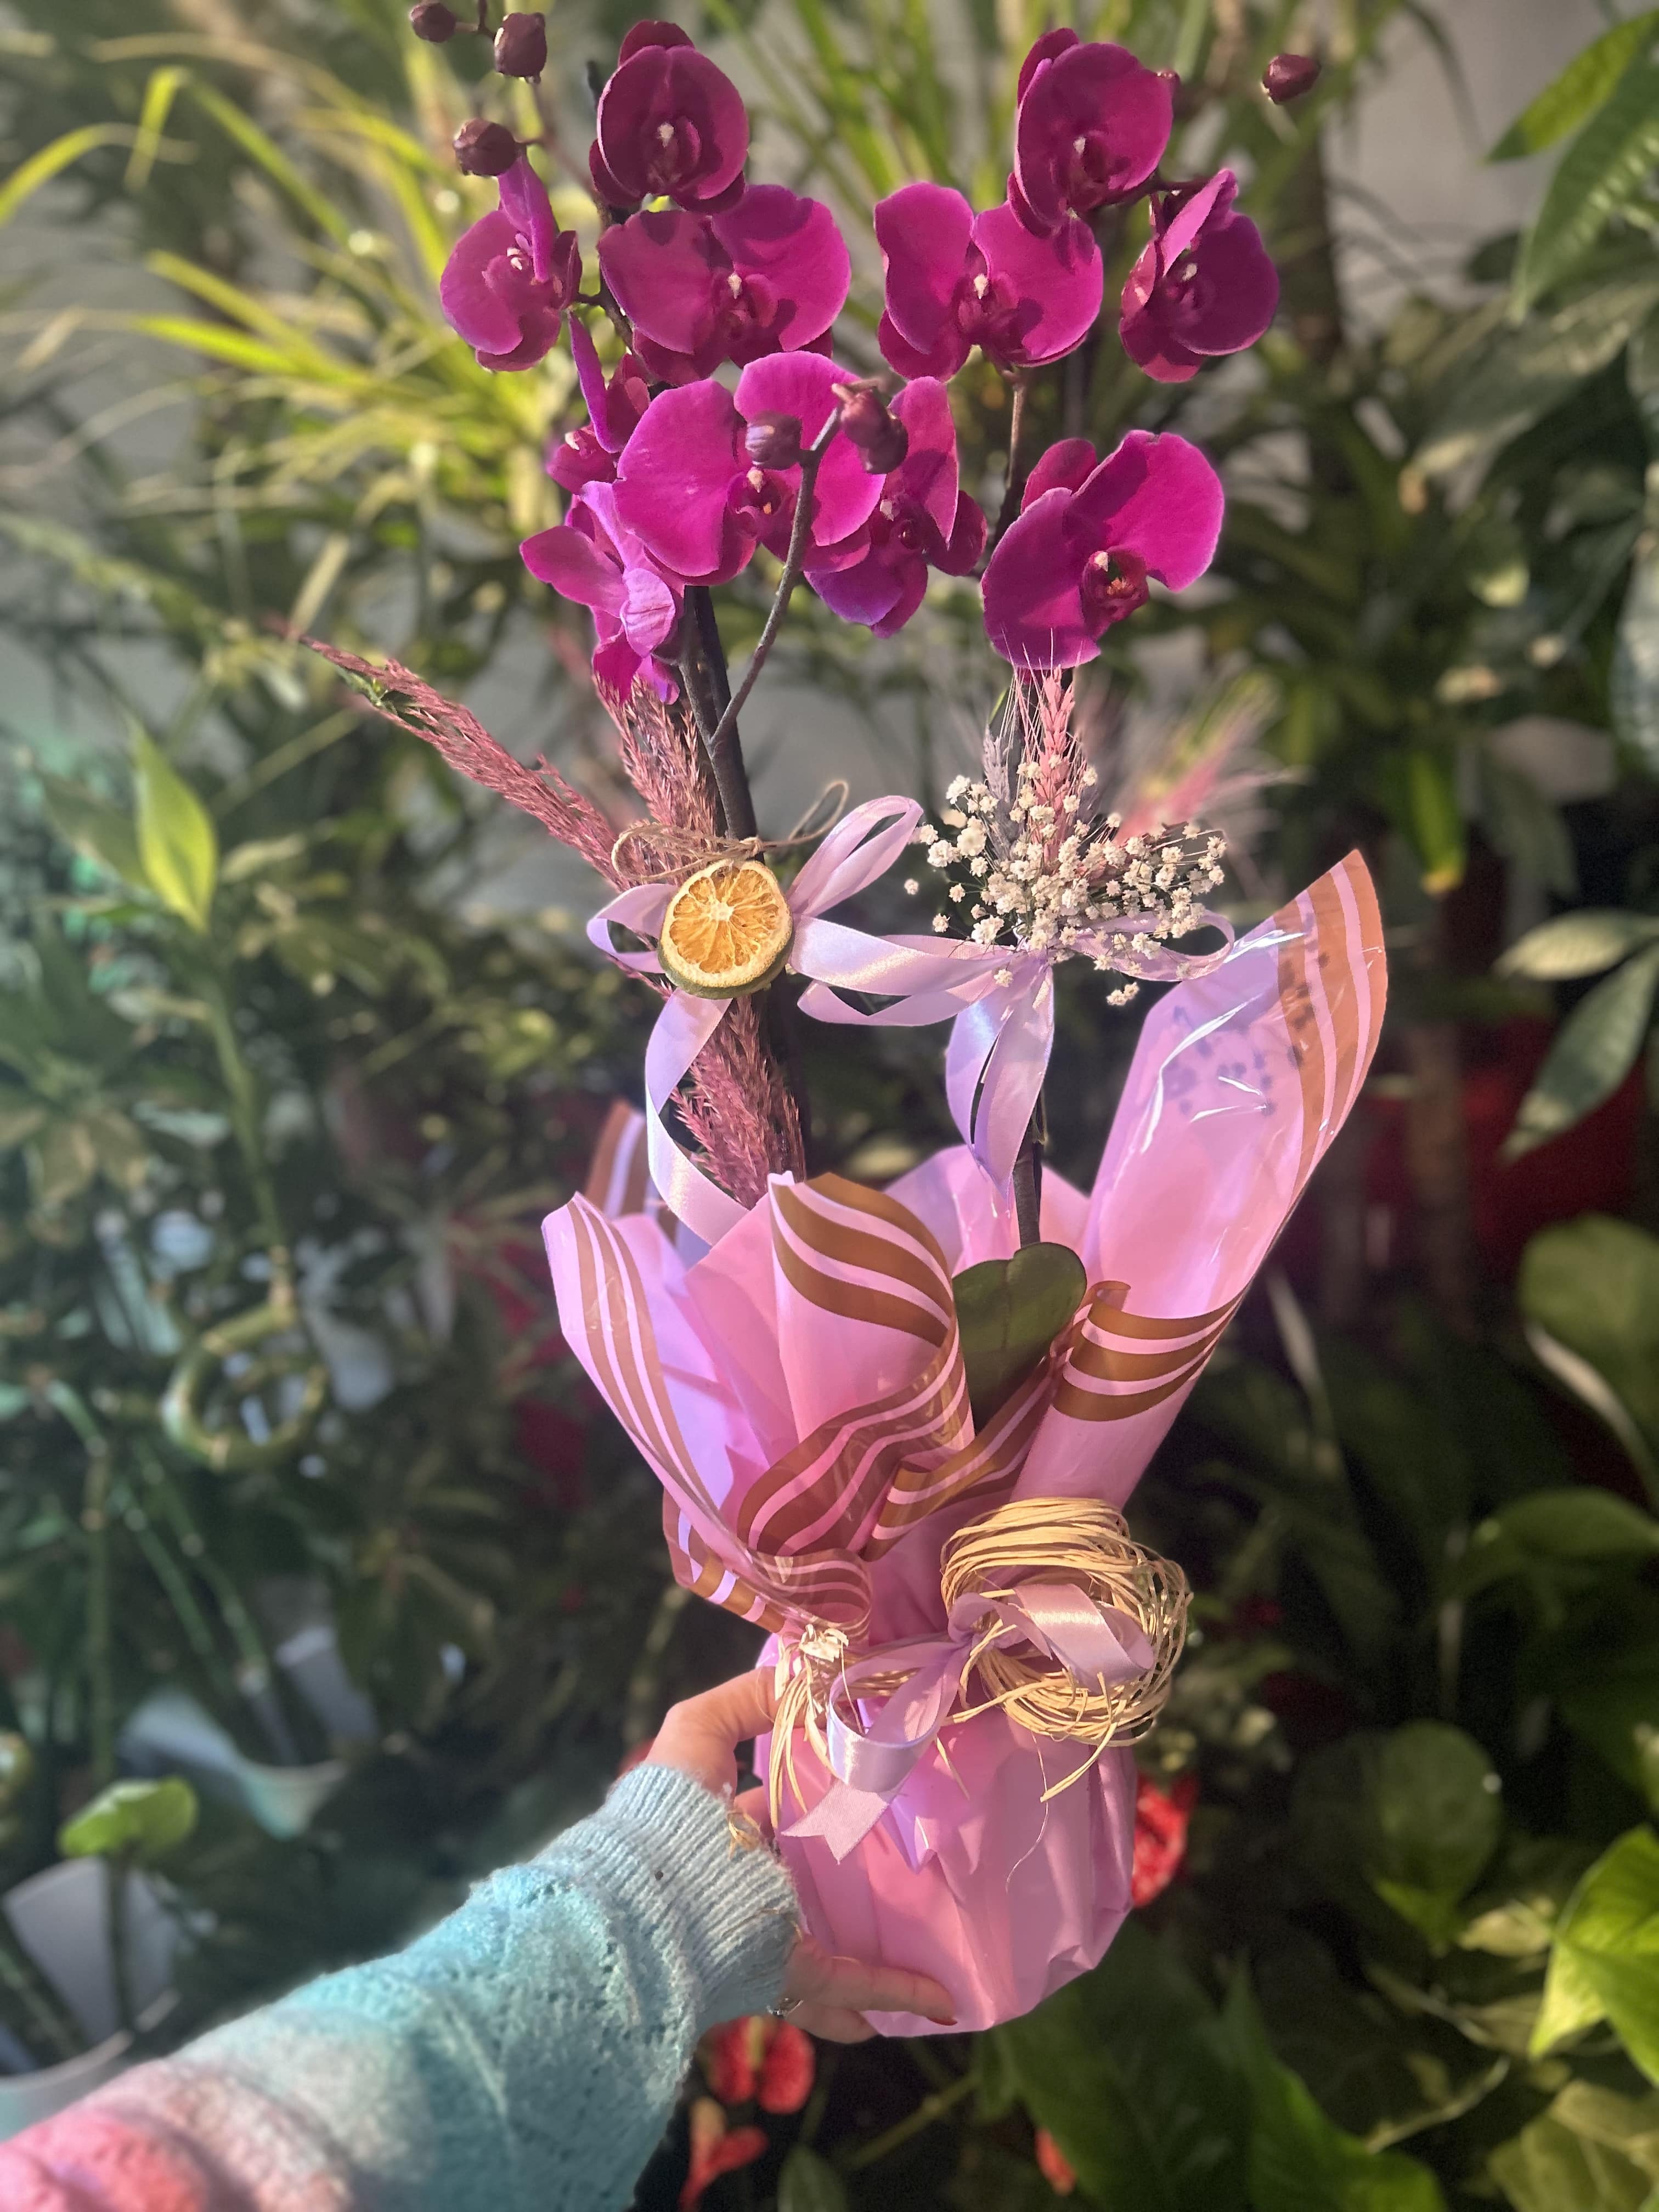 butik-suslemeli-orkide